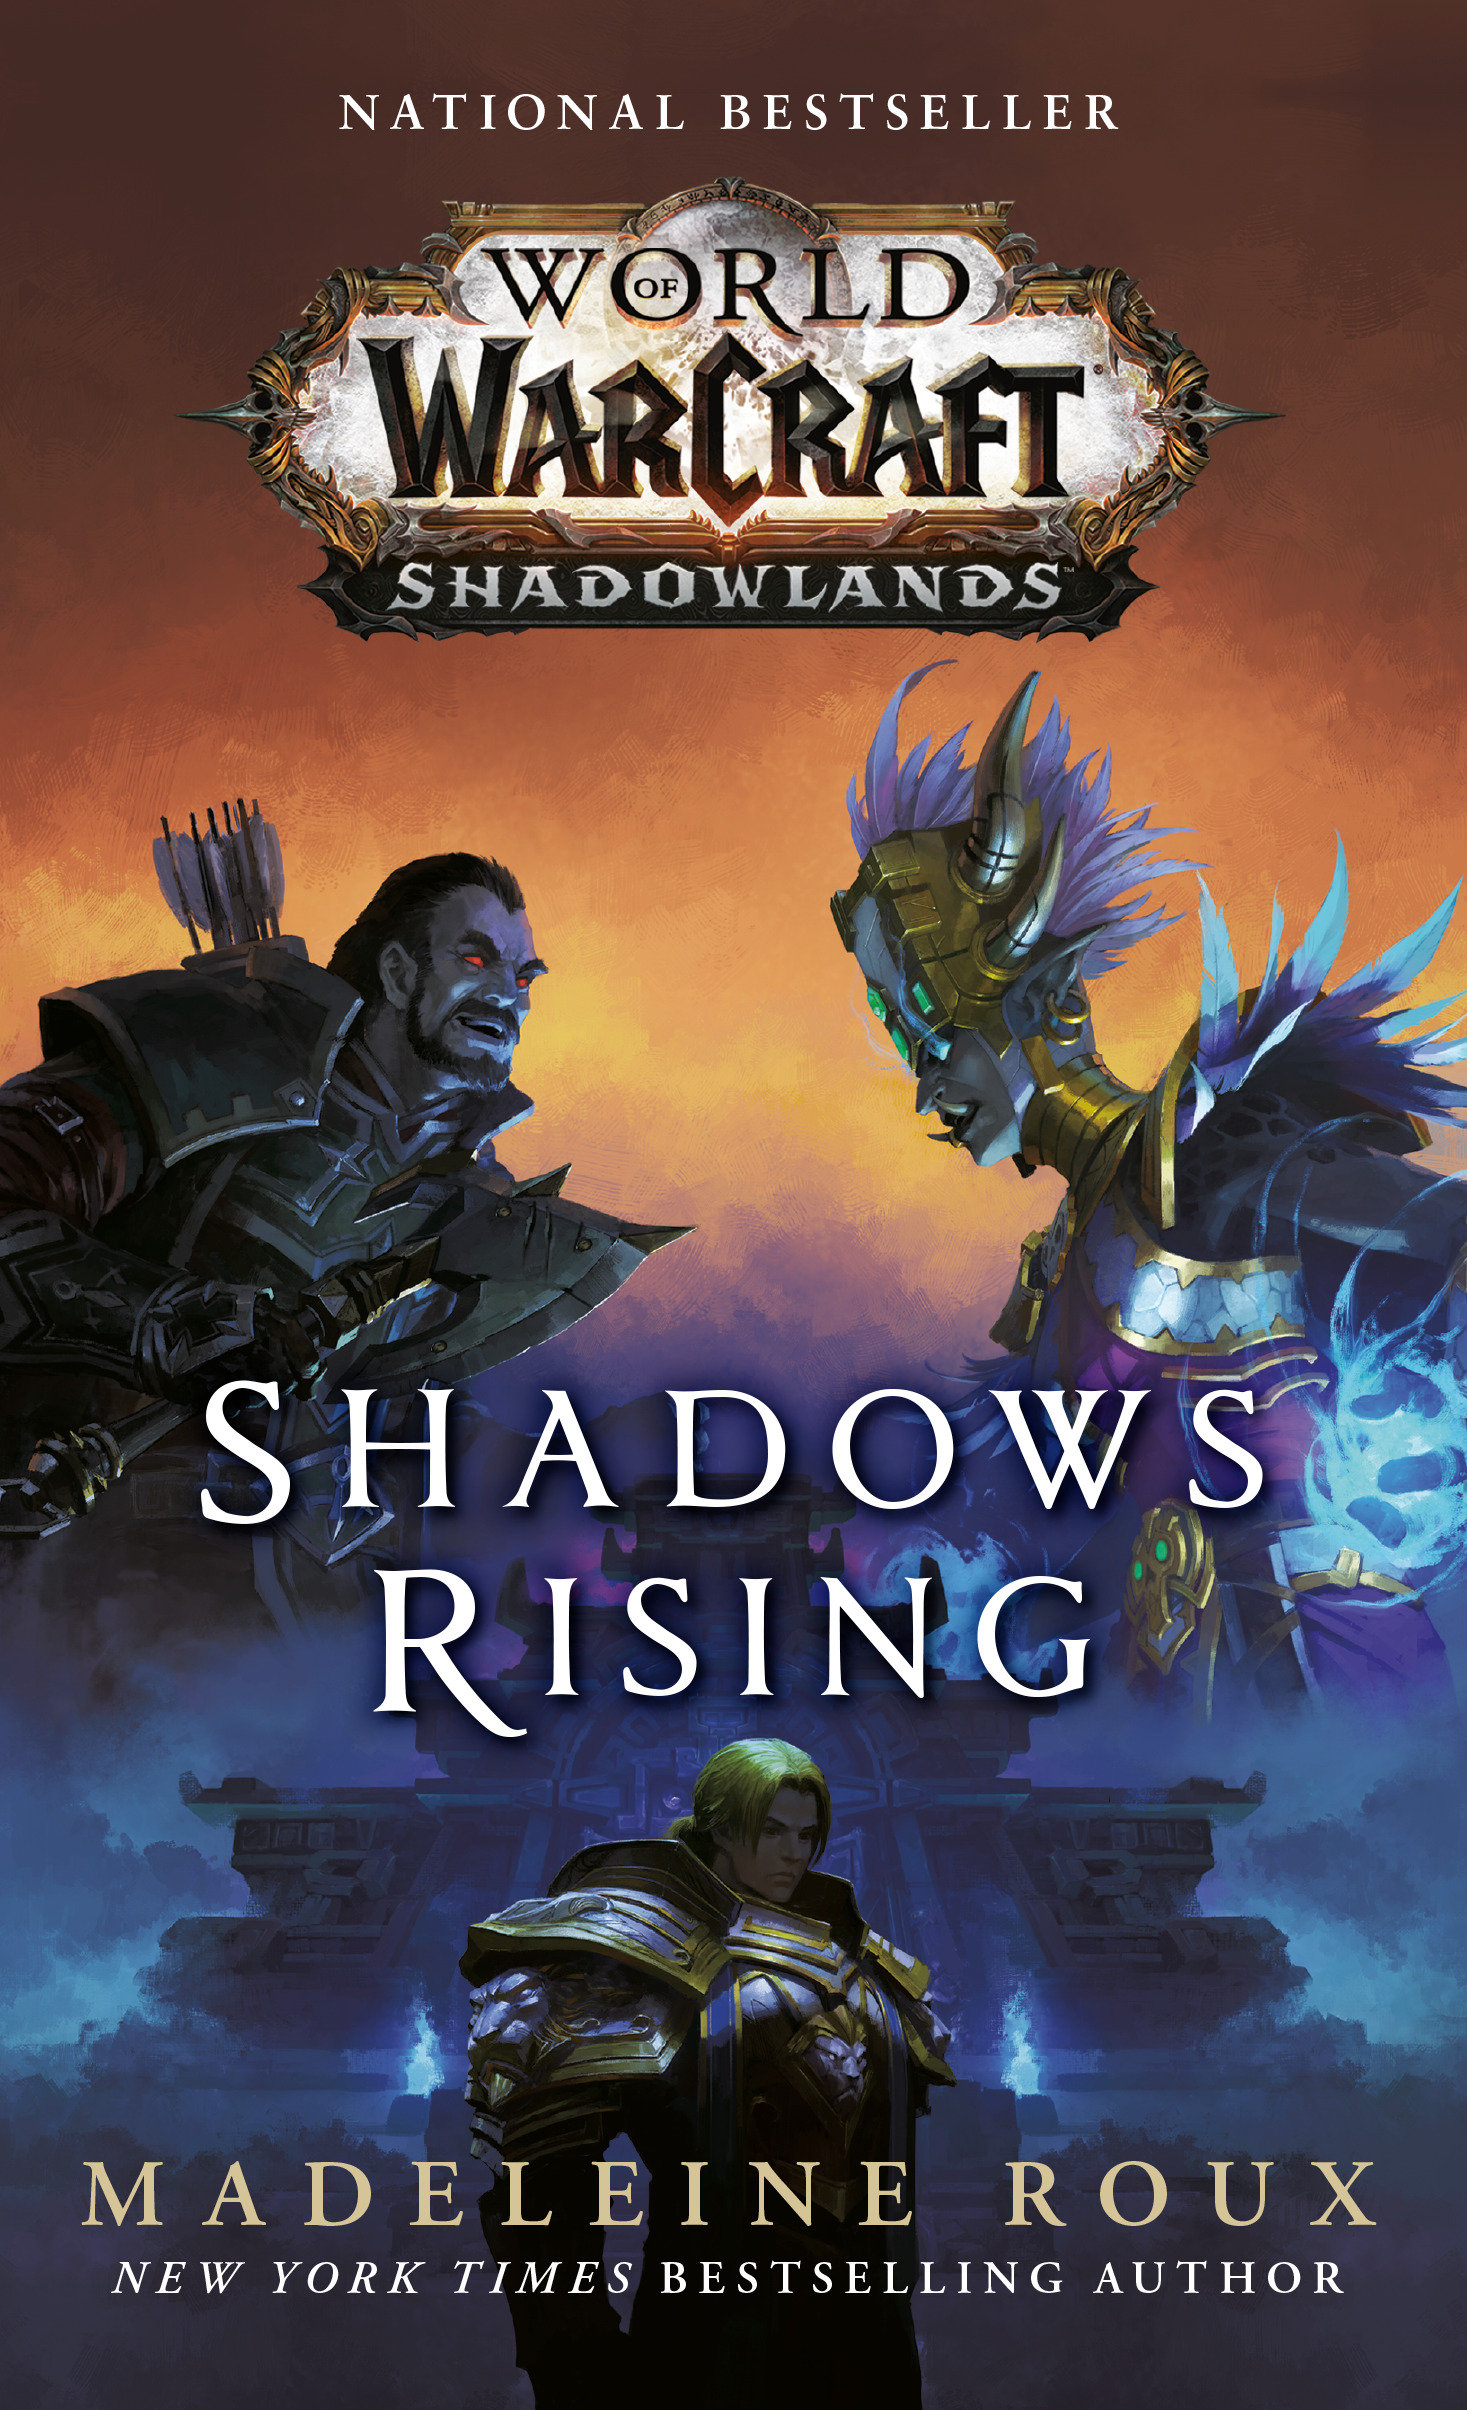 World of Warcraft Shadows Rising By Madeleine Roux